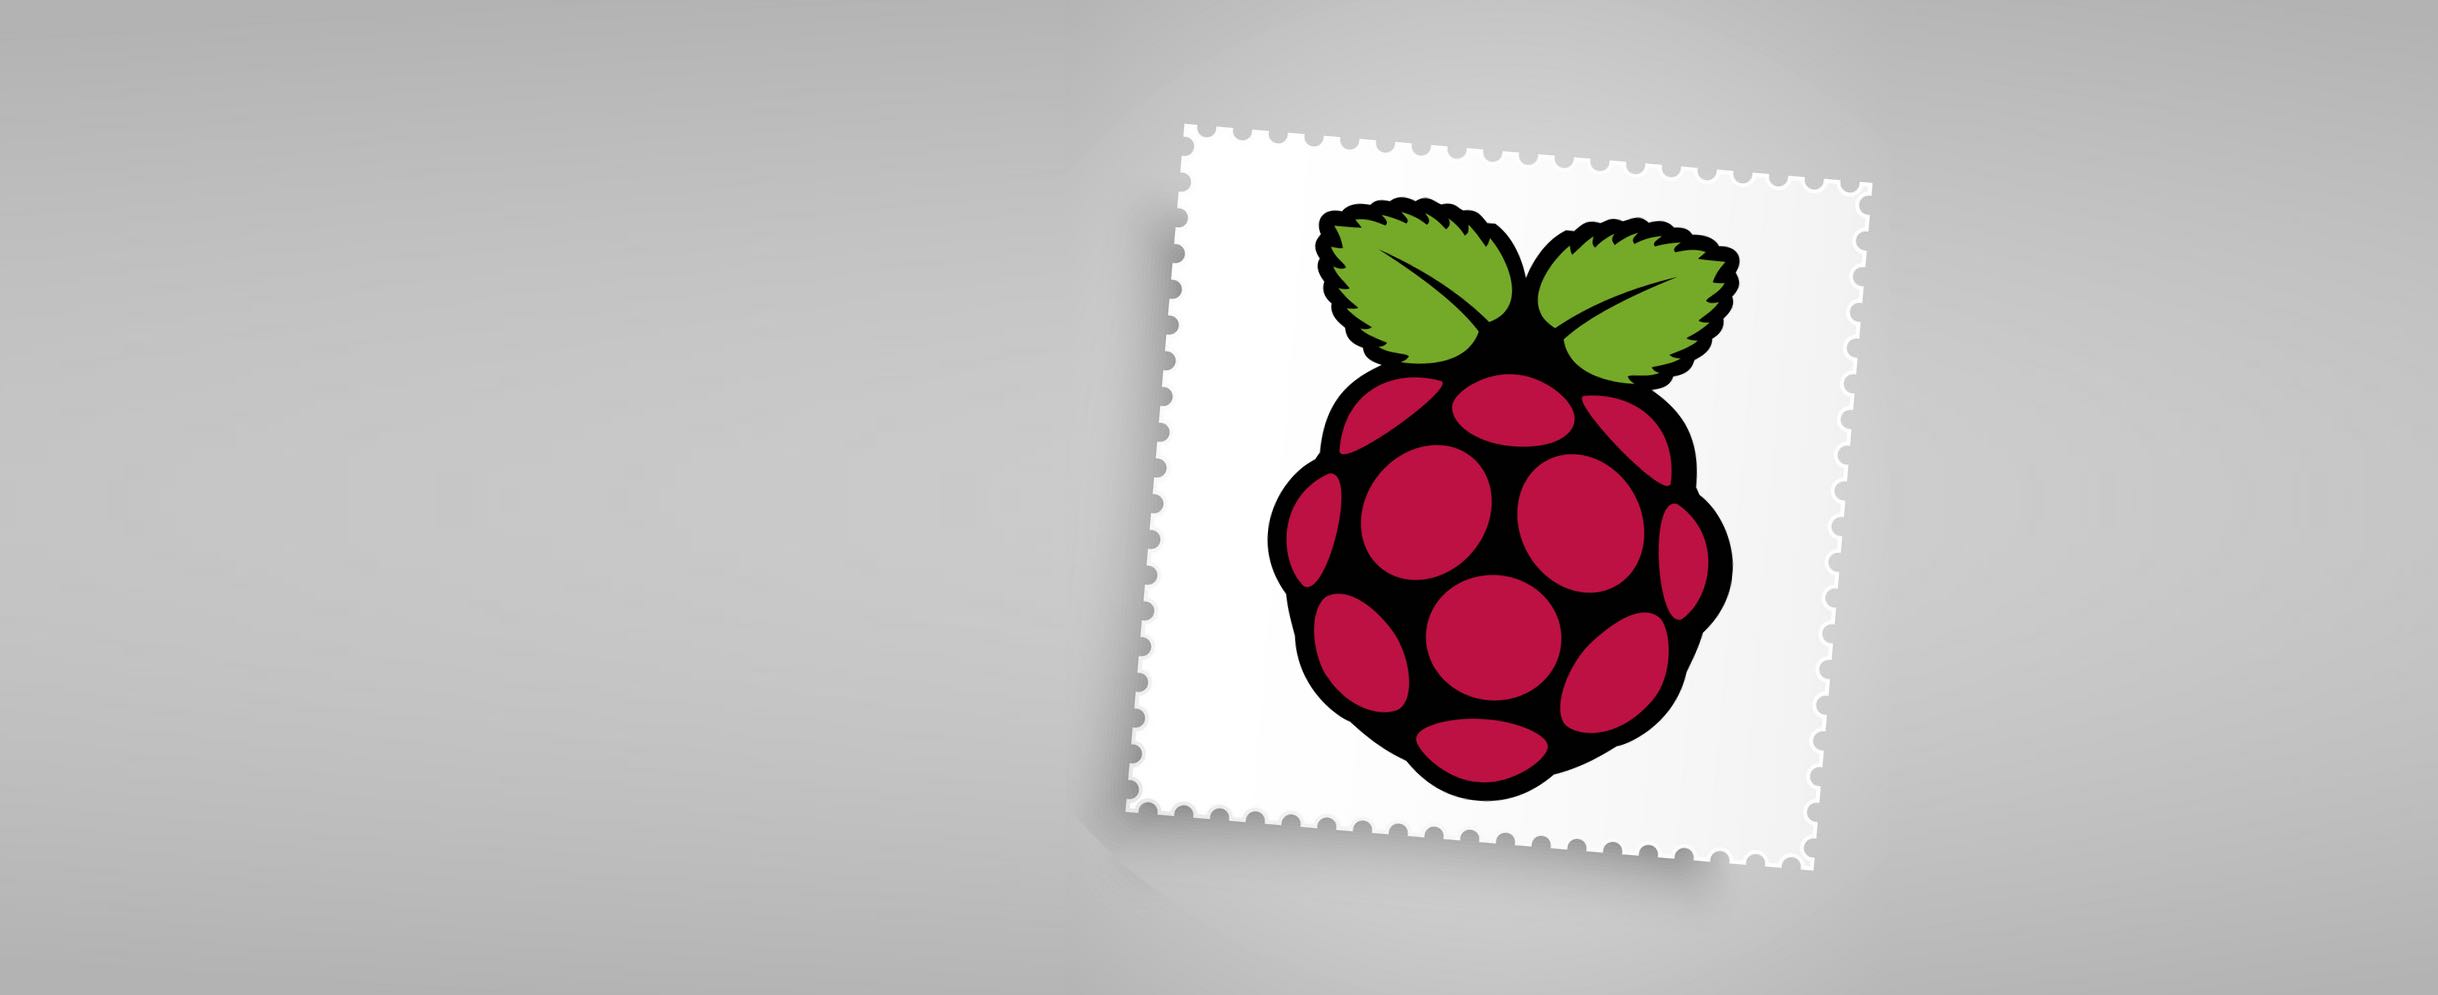 Raspberry Pi timbre